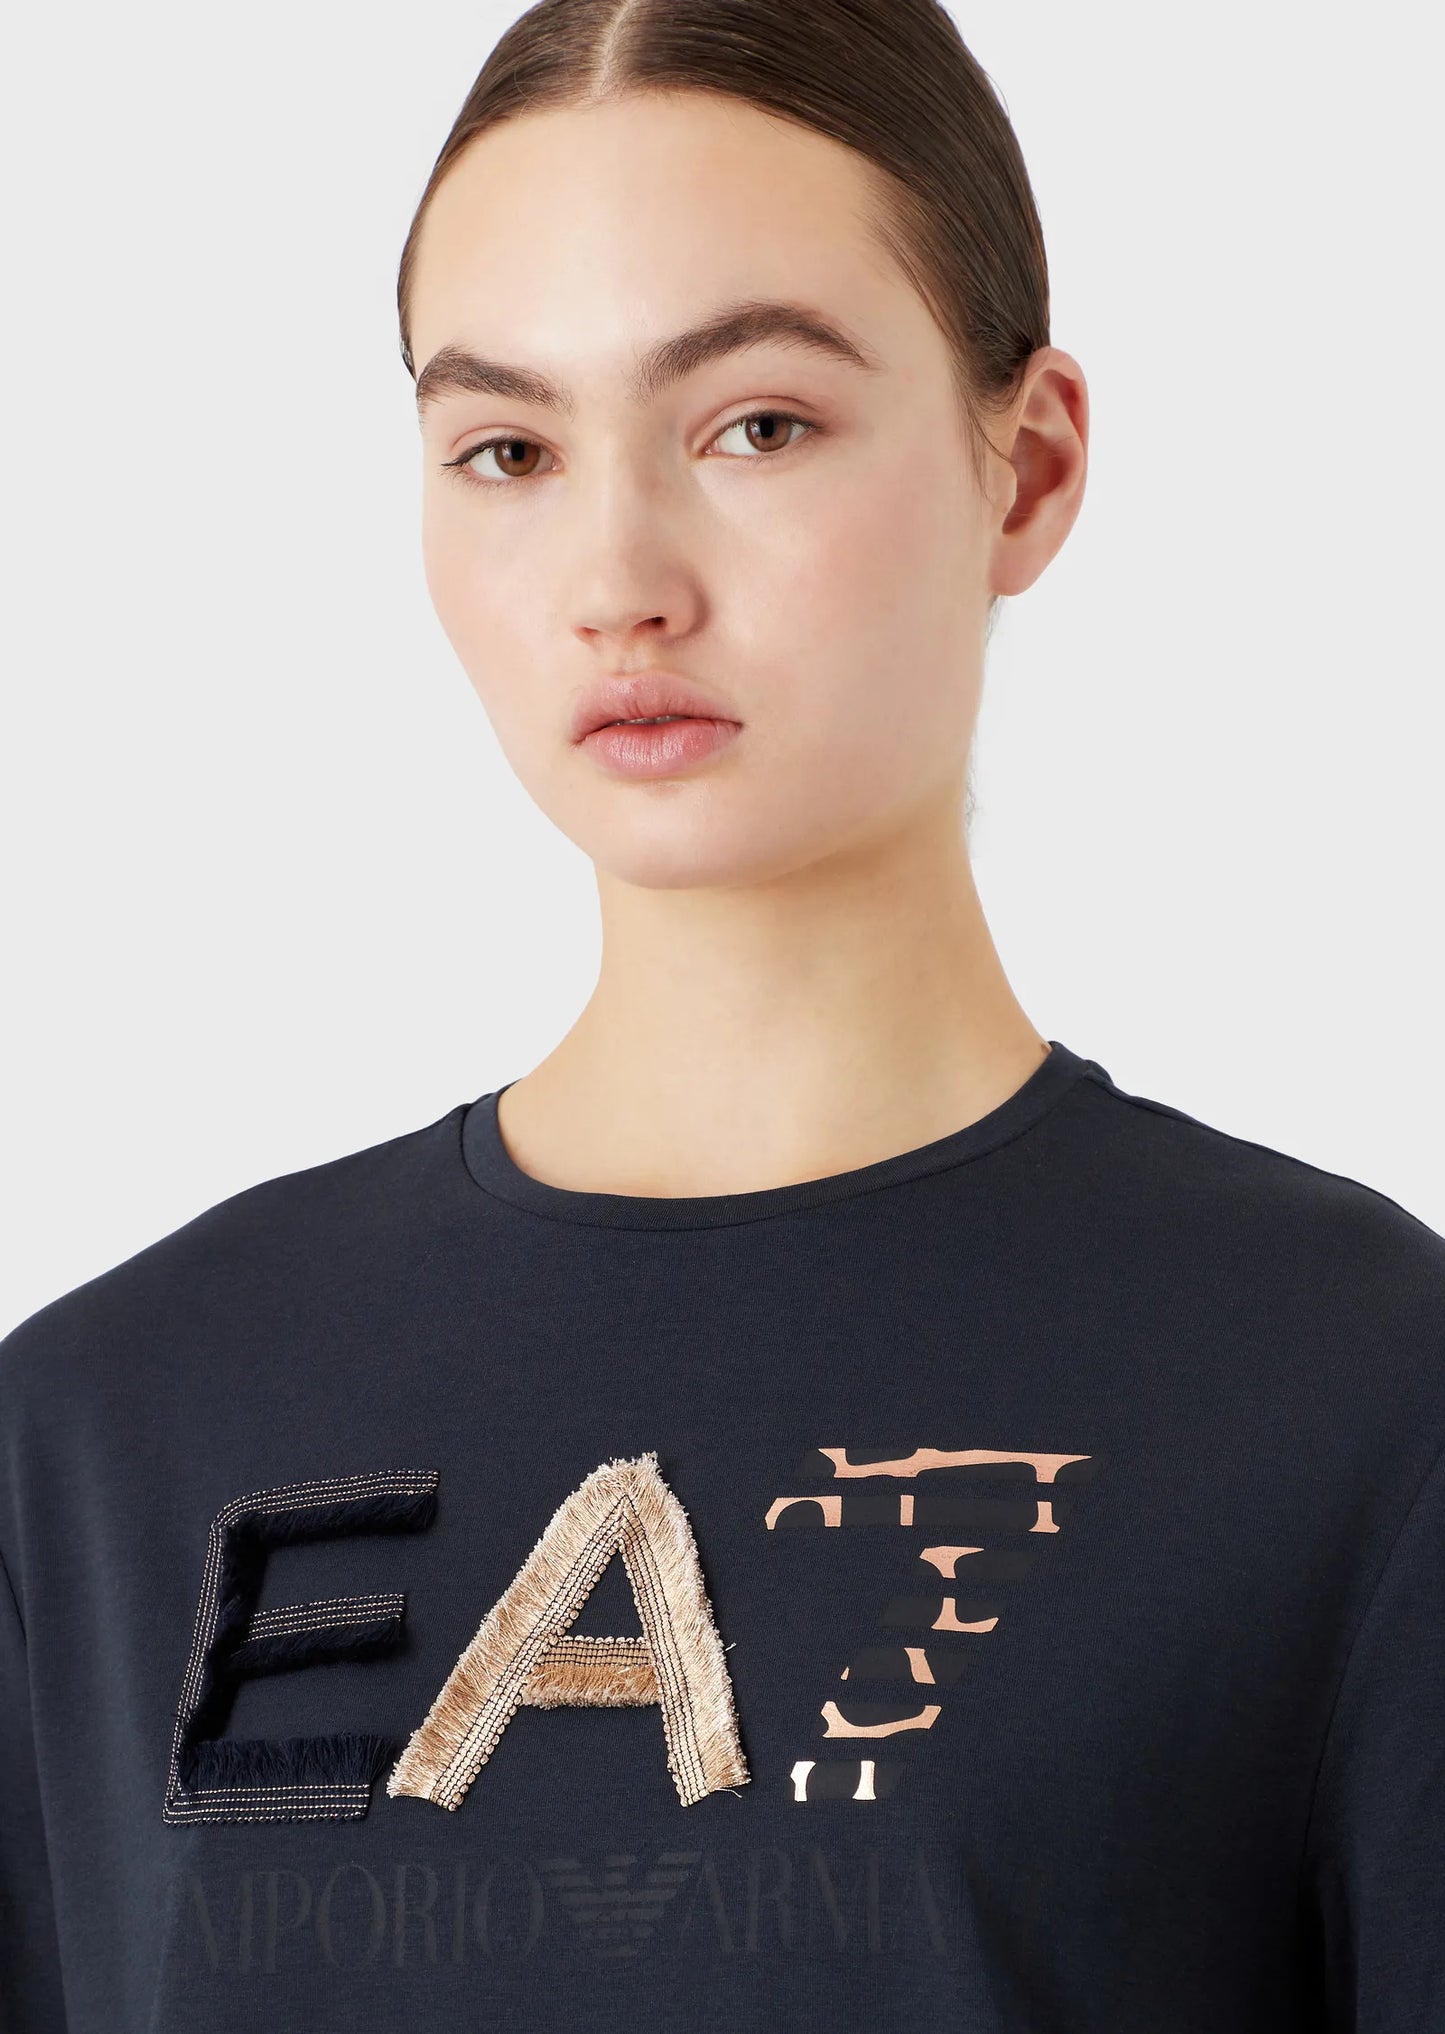 T-Shirt EA7 Emporio Armani donna 3RTT36 TJDZZ Navy Blu